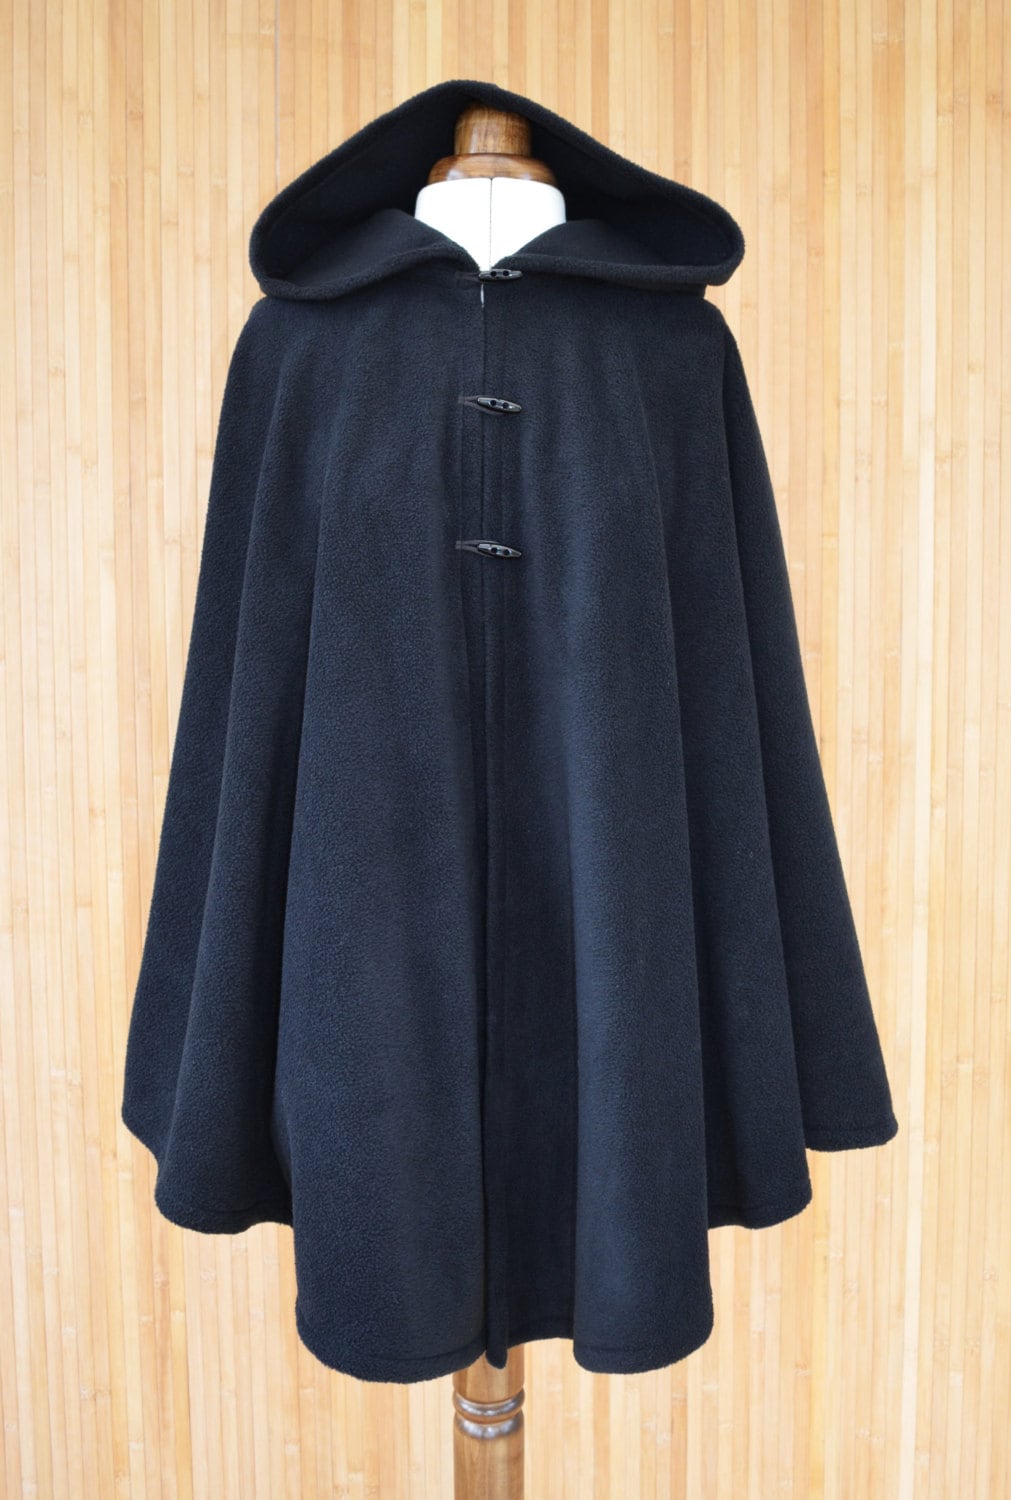 Womens' Black Handmade Hooded Cape / Hooded Cloak by DeliCatStudio